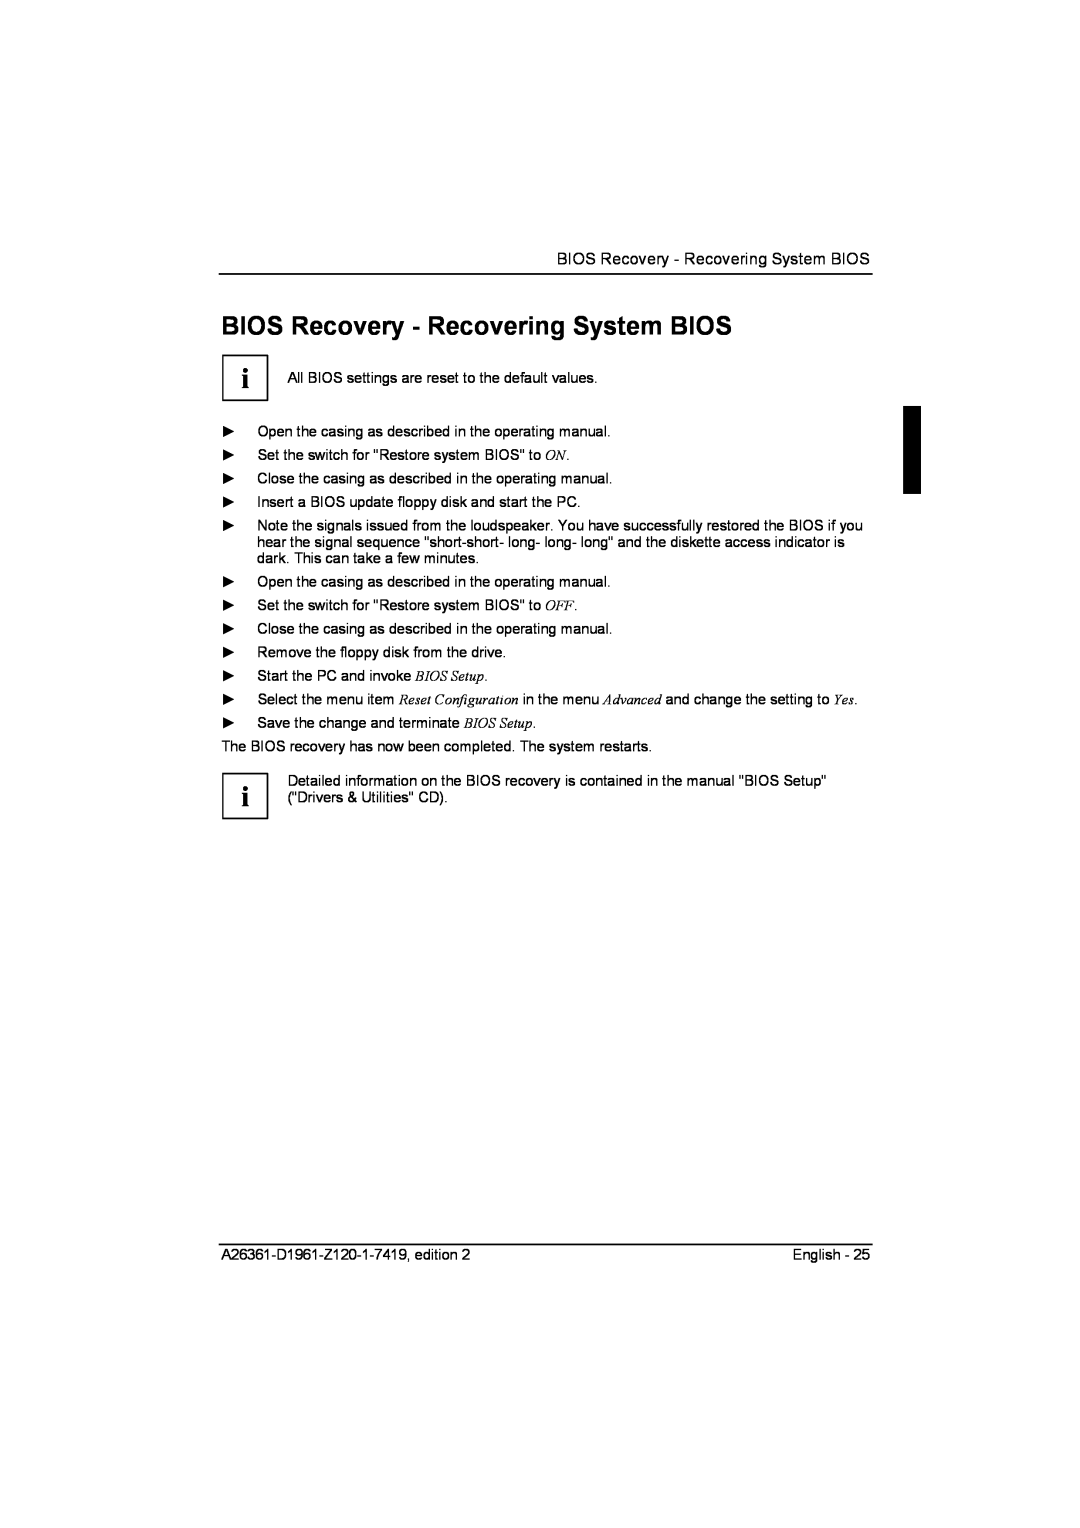 Fujitsu D1961 technical manual BIOS Recovery - Recovering System BIOS 